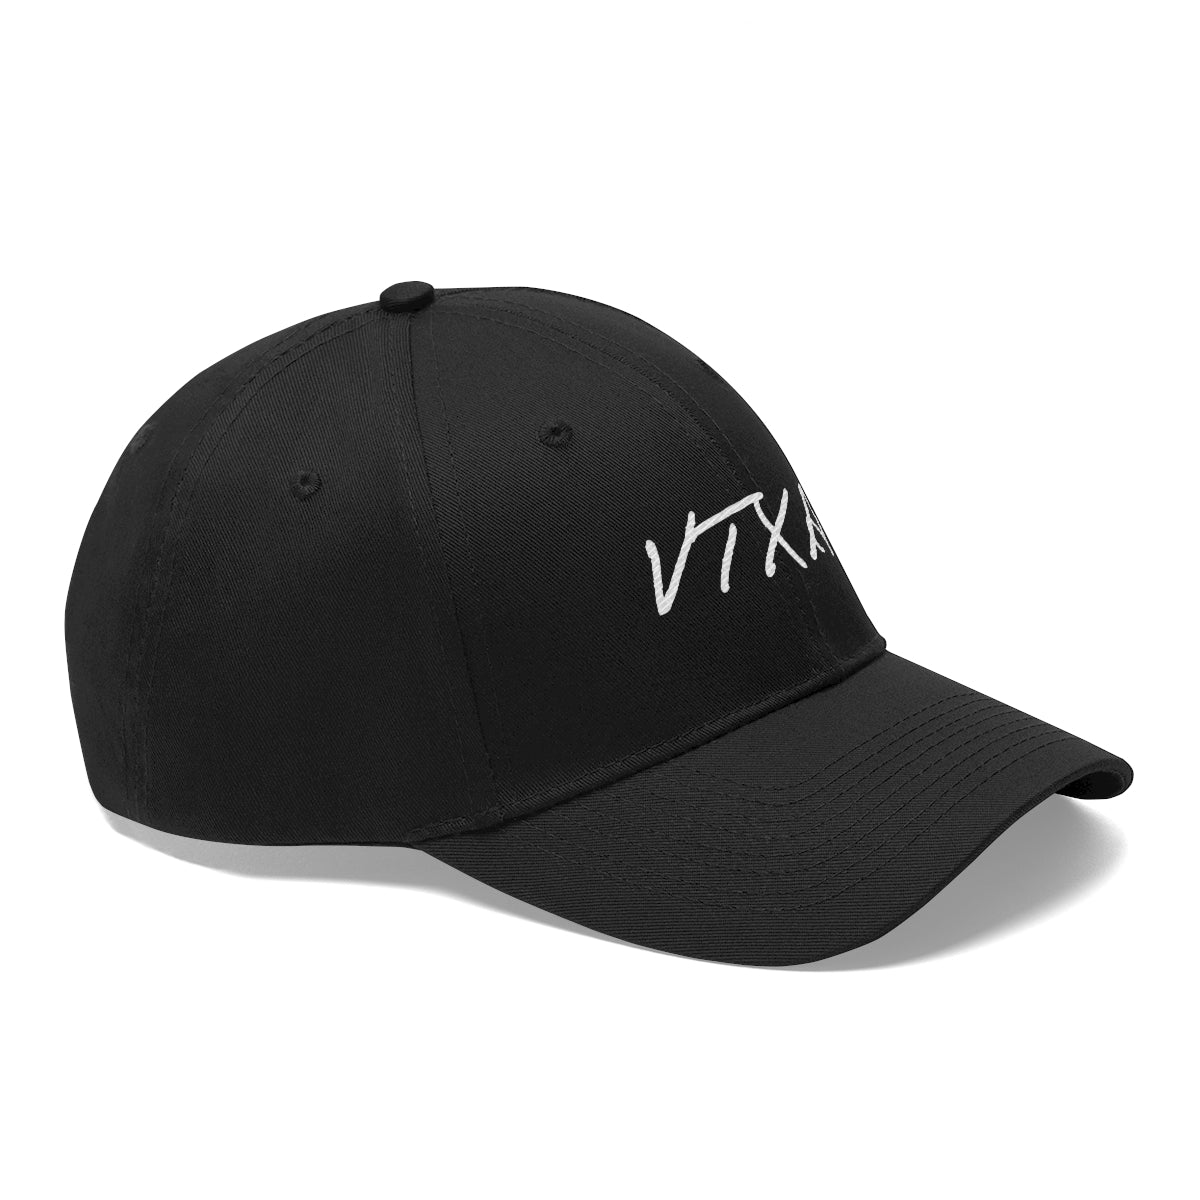 VTXA Embroidered Hat